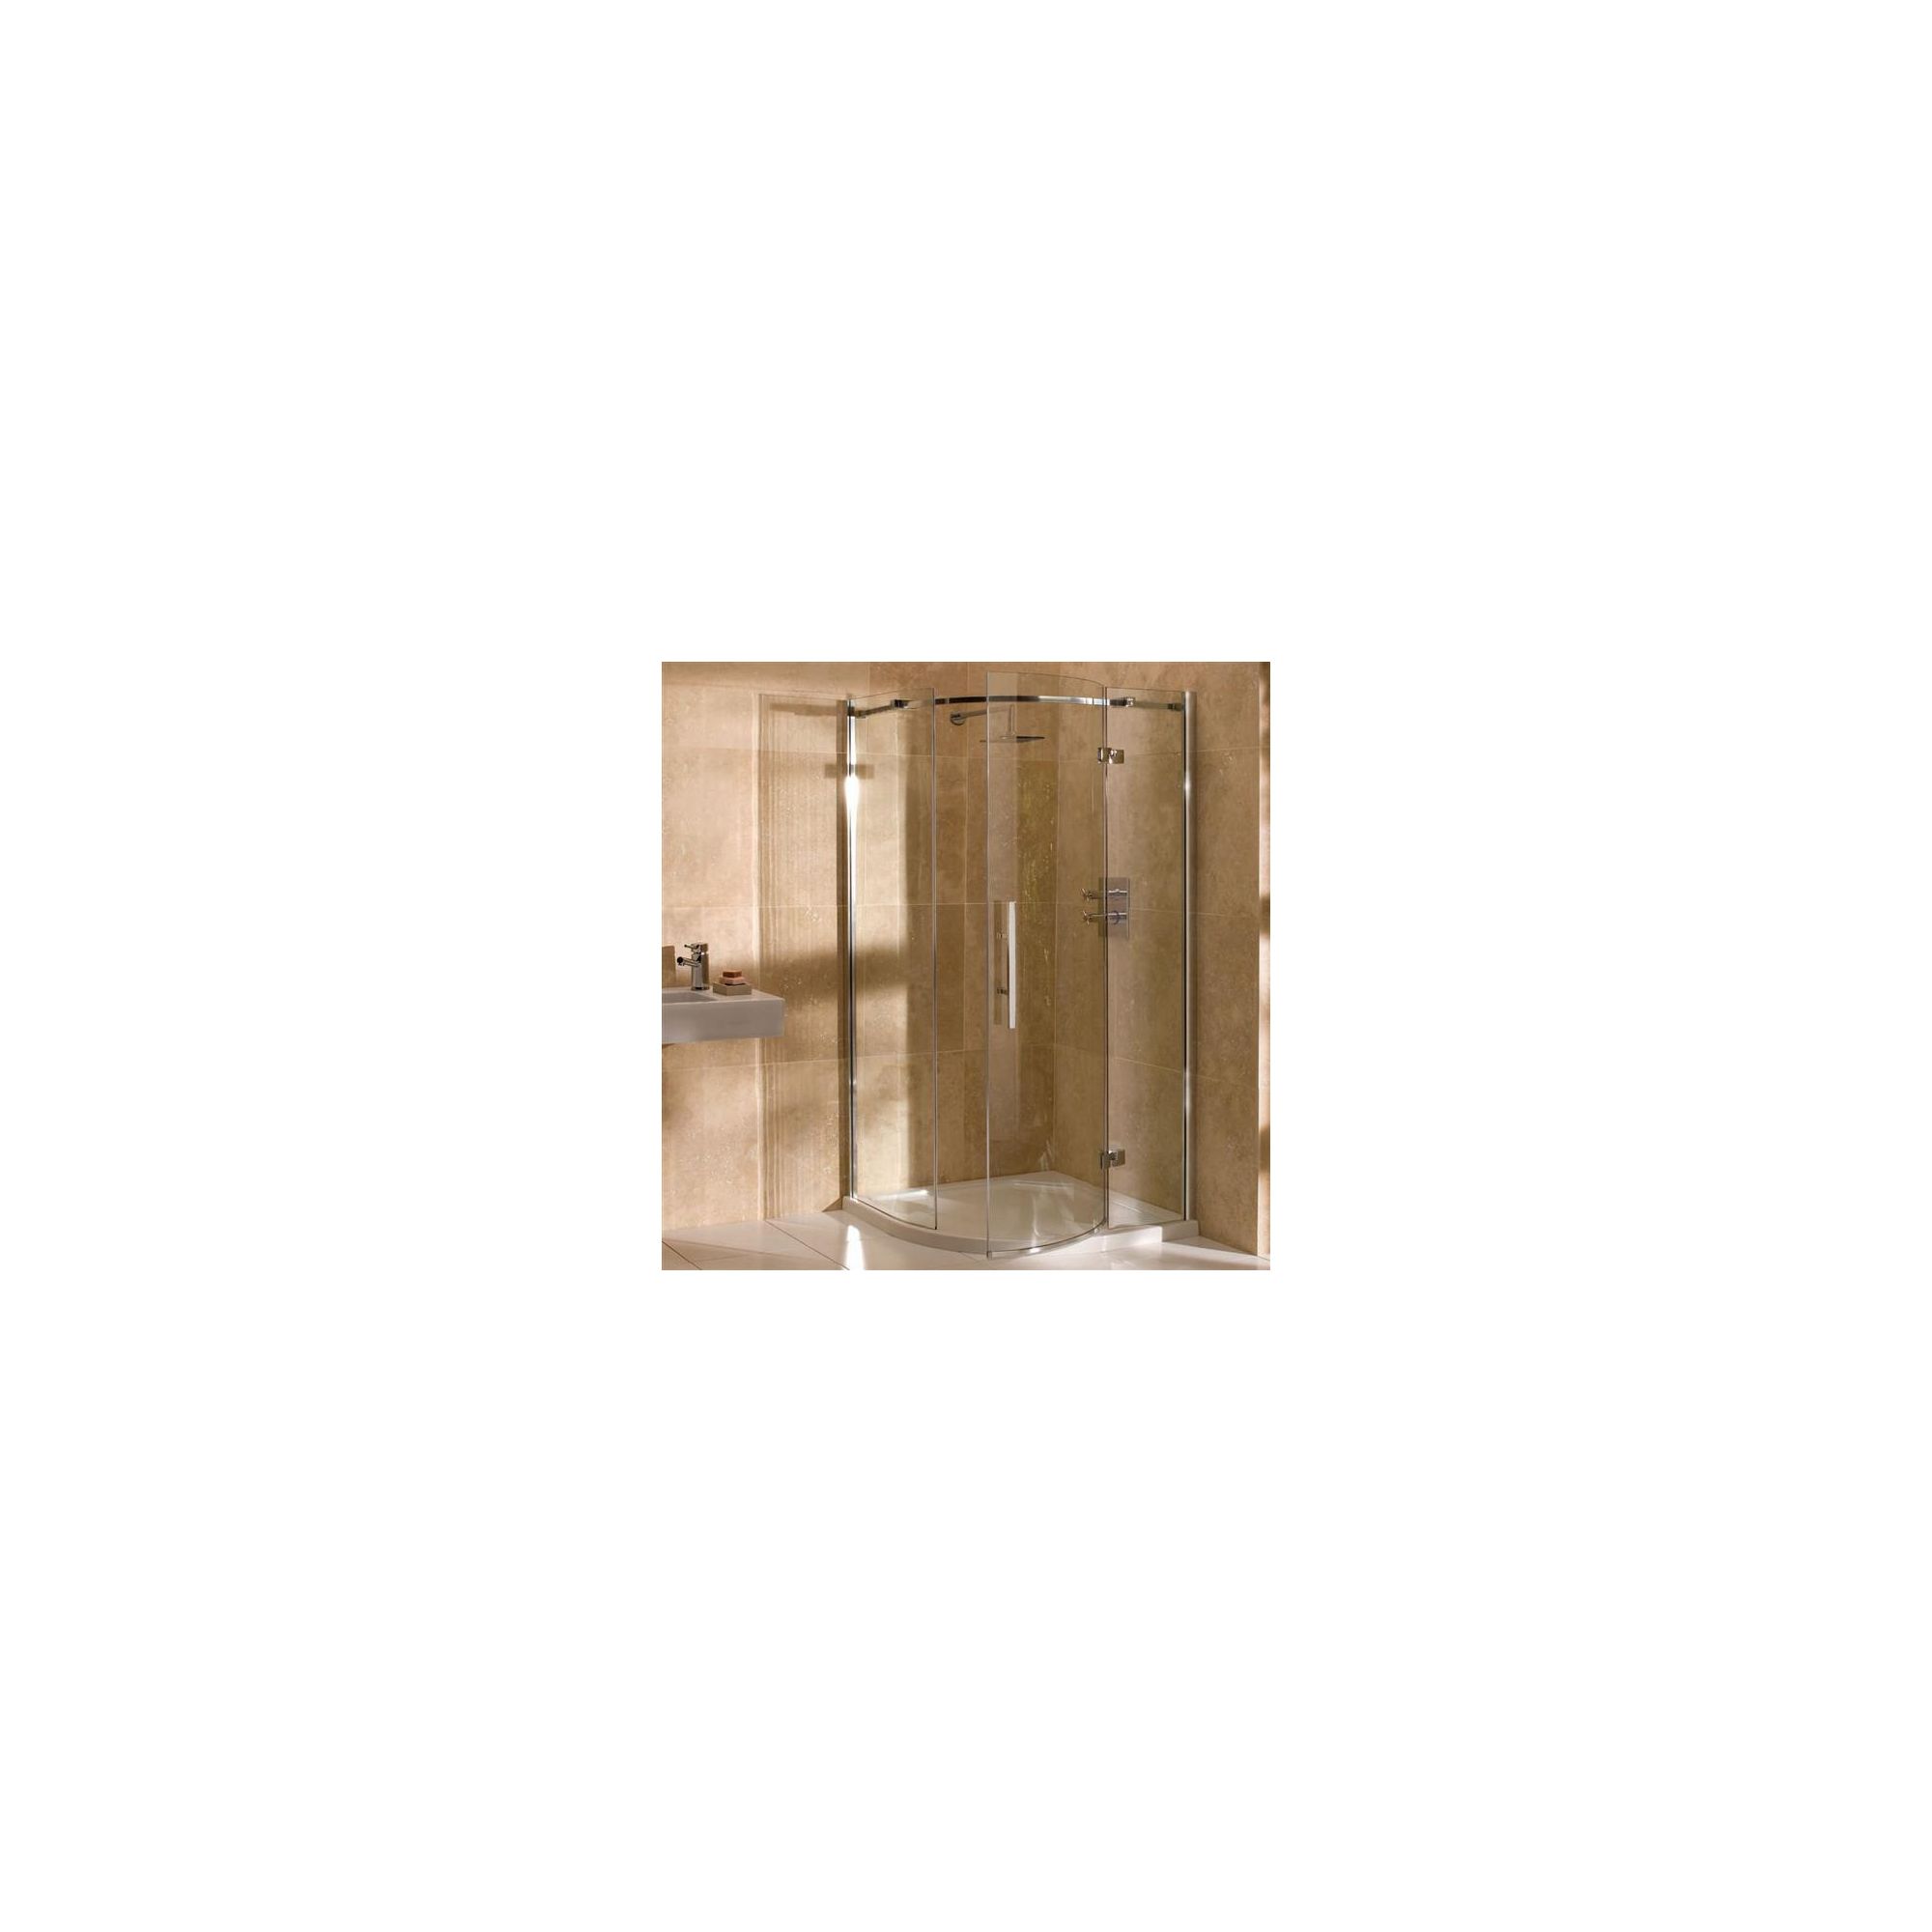 Merlyn Vivid Nine Quadrant Shower Door, 1000mm x 1000mm, Left Handed, 8mm Glass at Tesco Direct